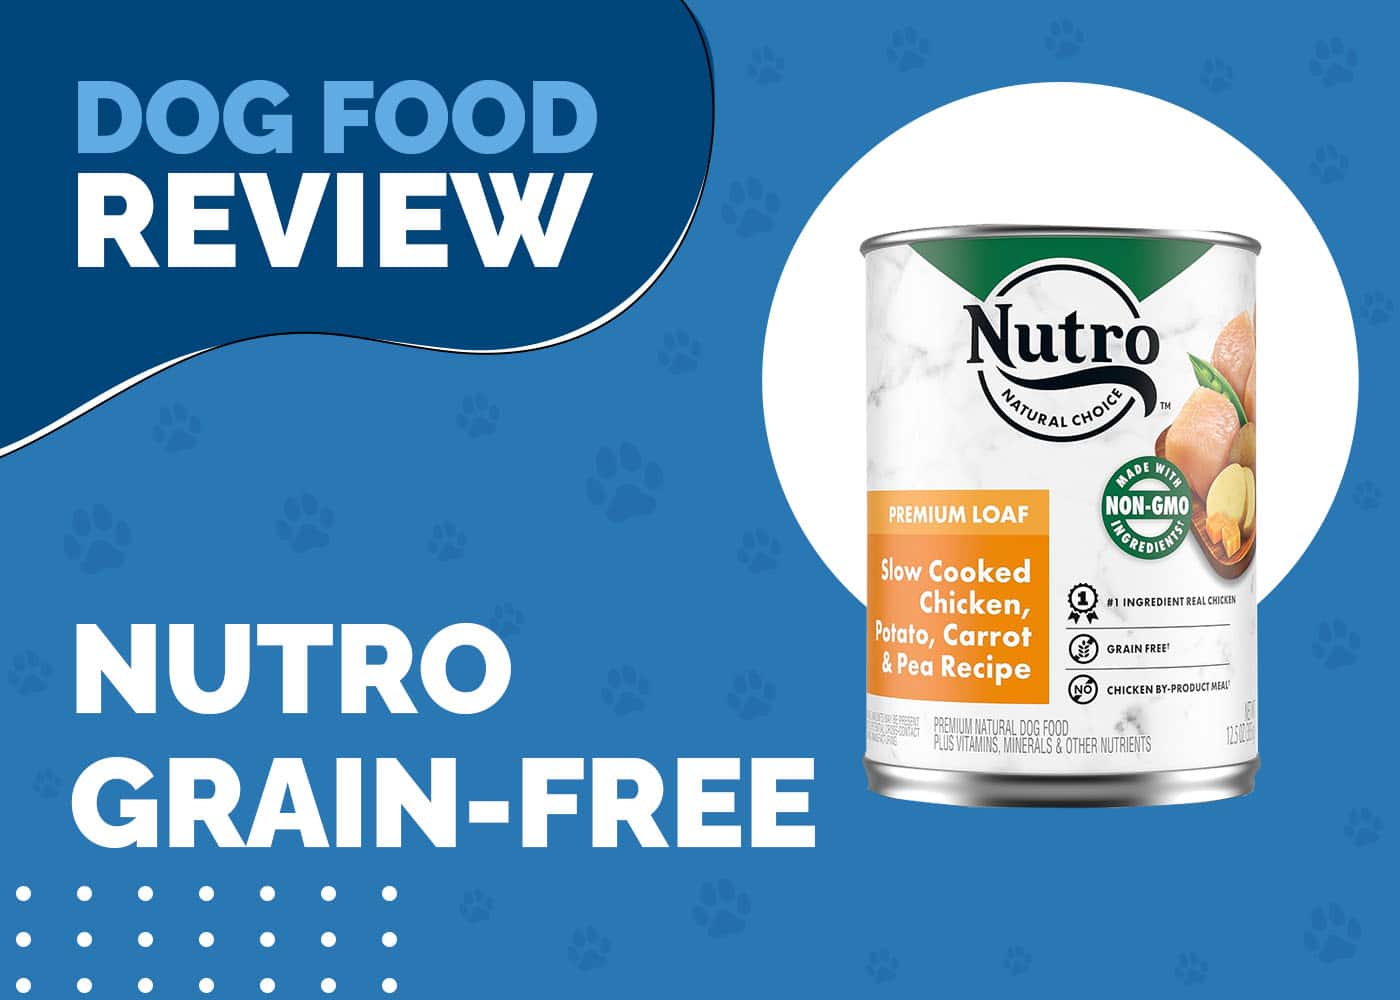 Nutro Grain-Free Dog Food Review